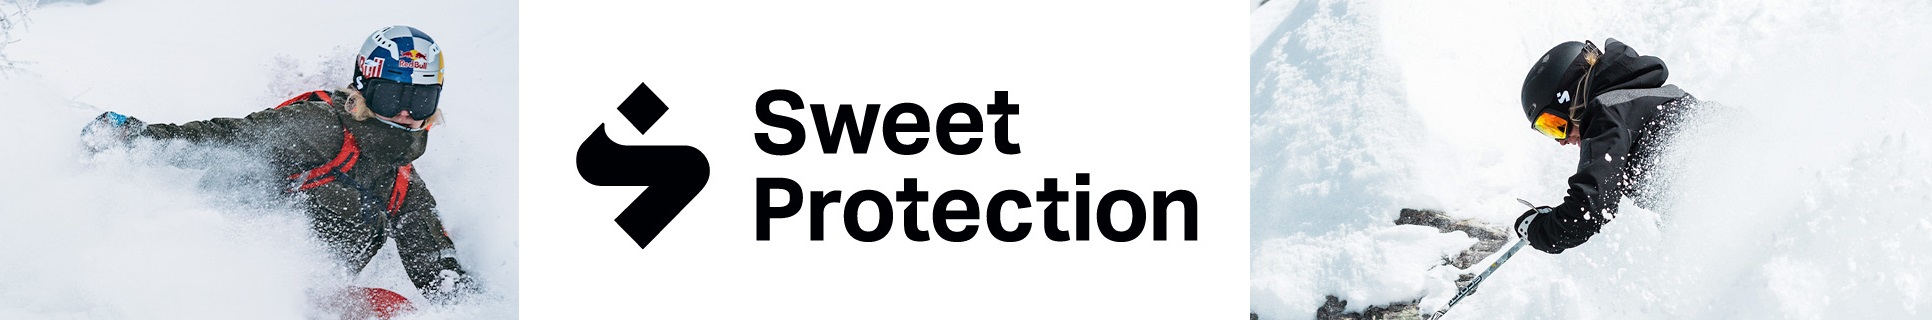 Sweetprotection_baner_ico.jpg